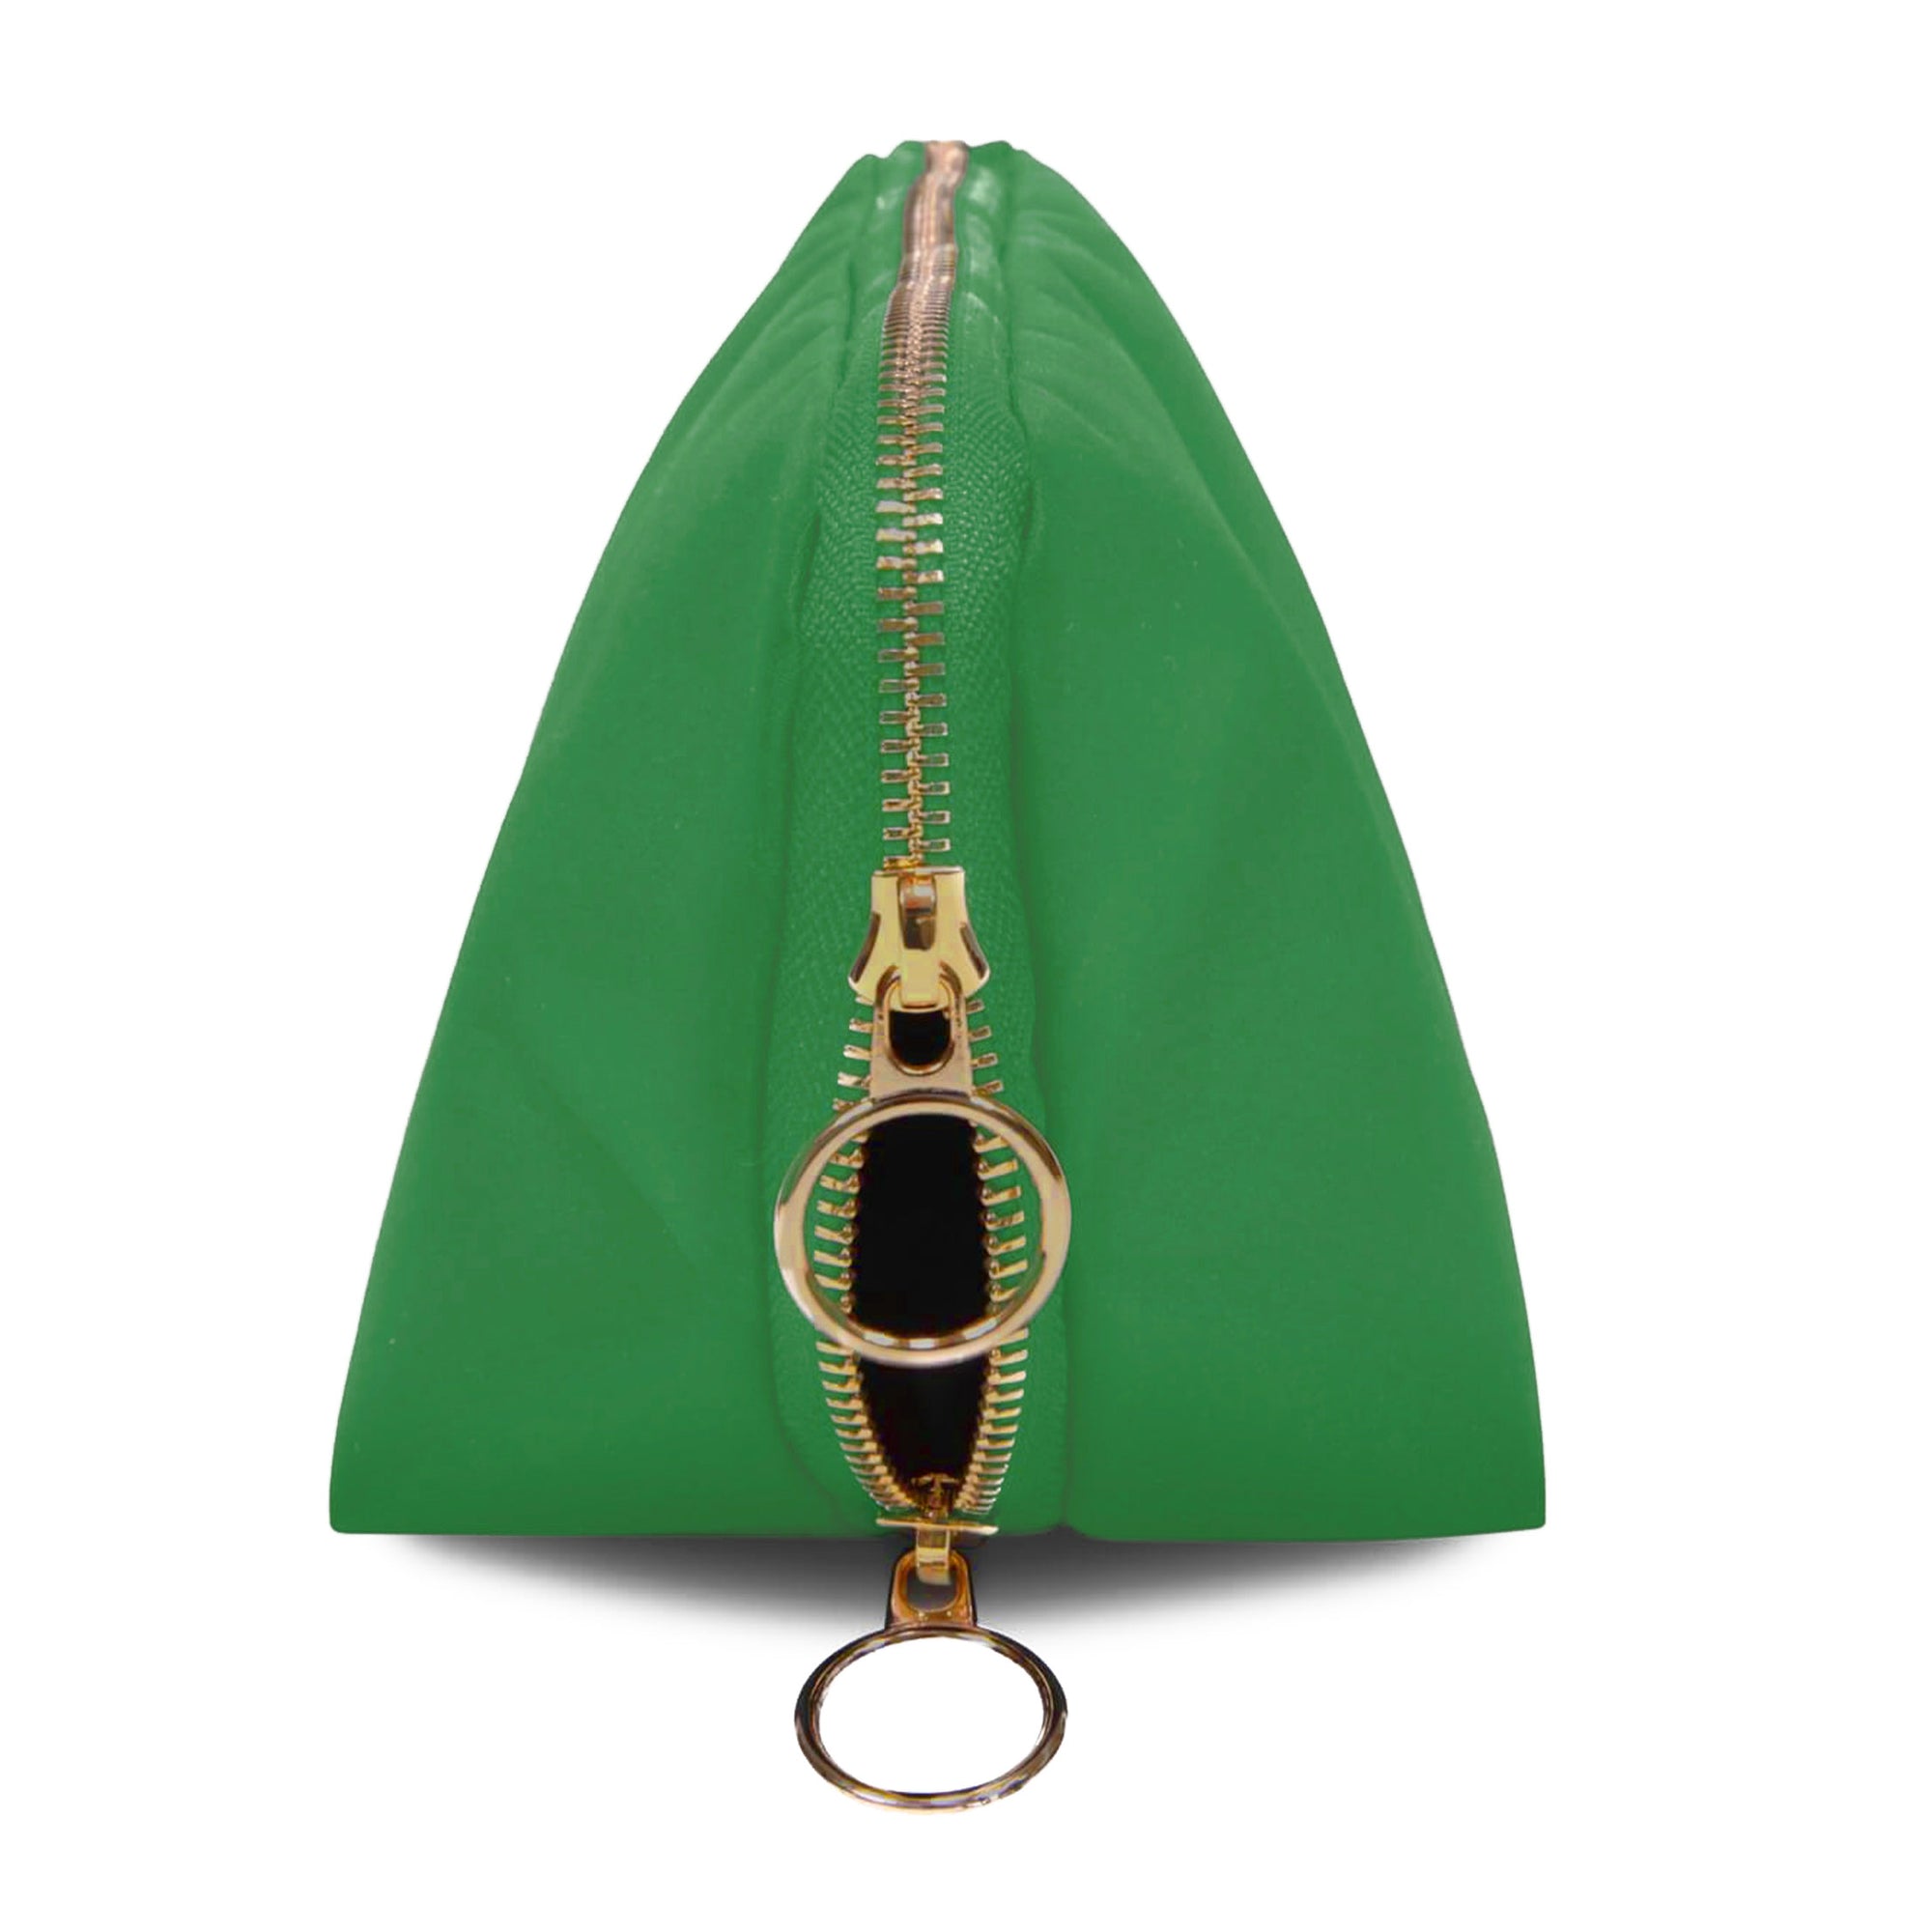 color: Kelly Green Fabric with Light Navy interior; alt: Signature Medium Size Makeup Bag | KUSSHI